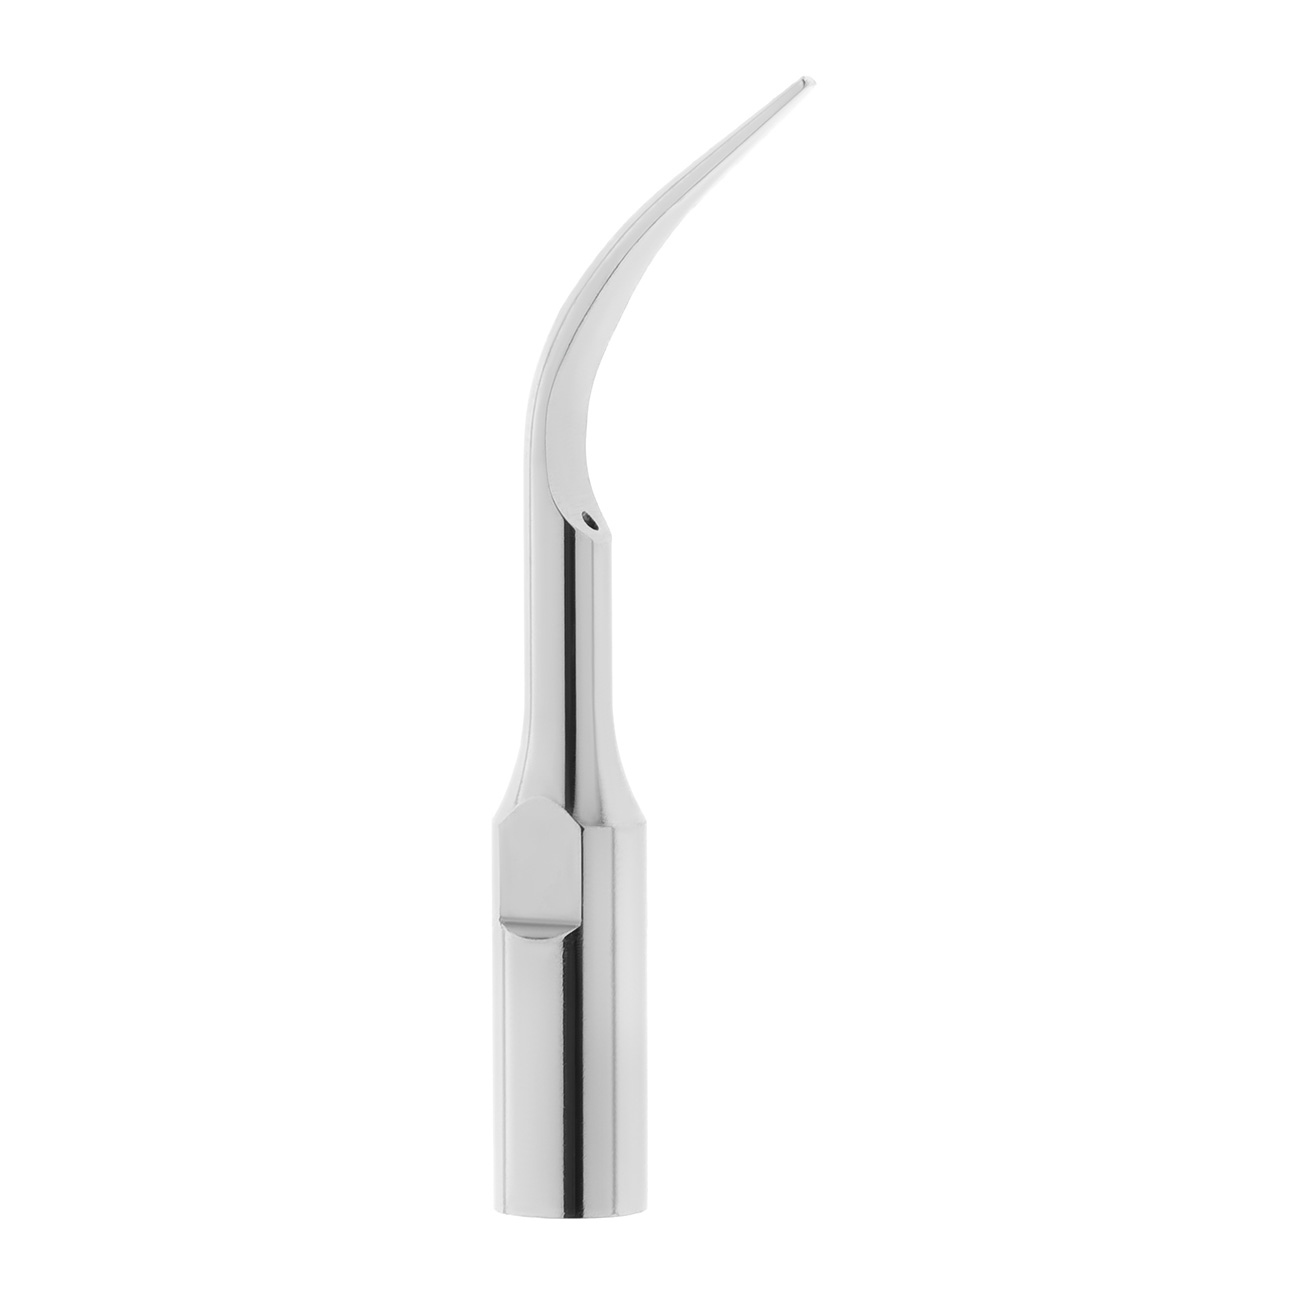 Насадка GD1 к скалеру DTE/NSK/SATELEC, для удаления зубного камня